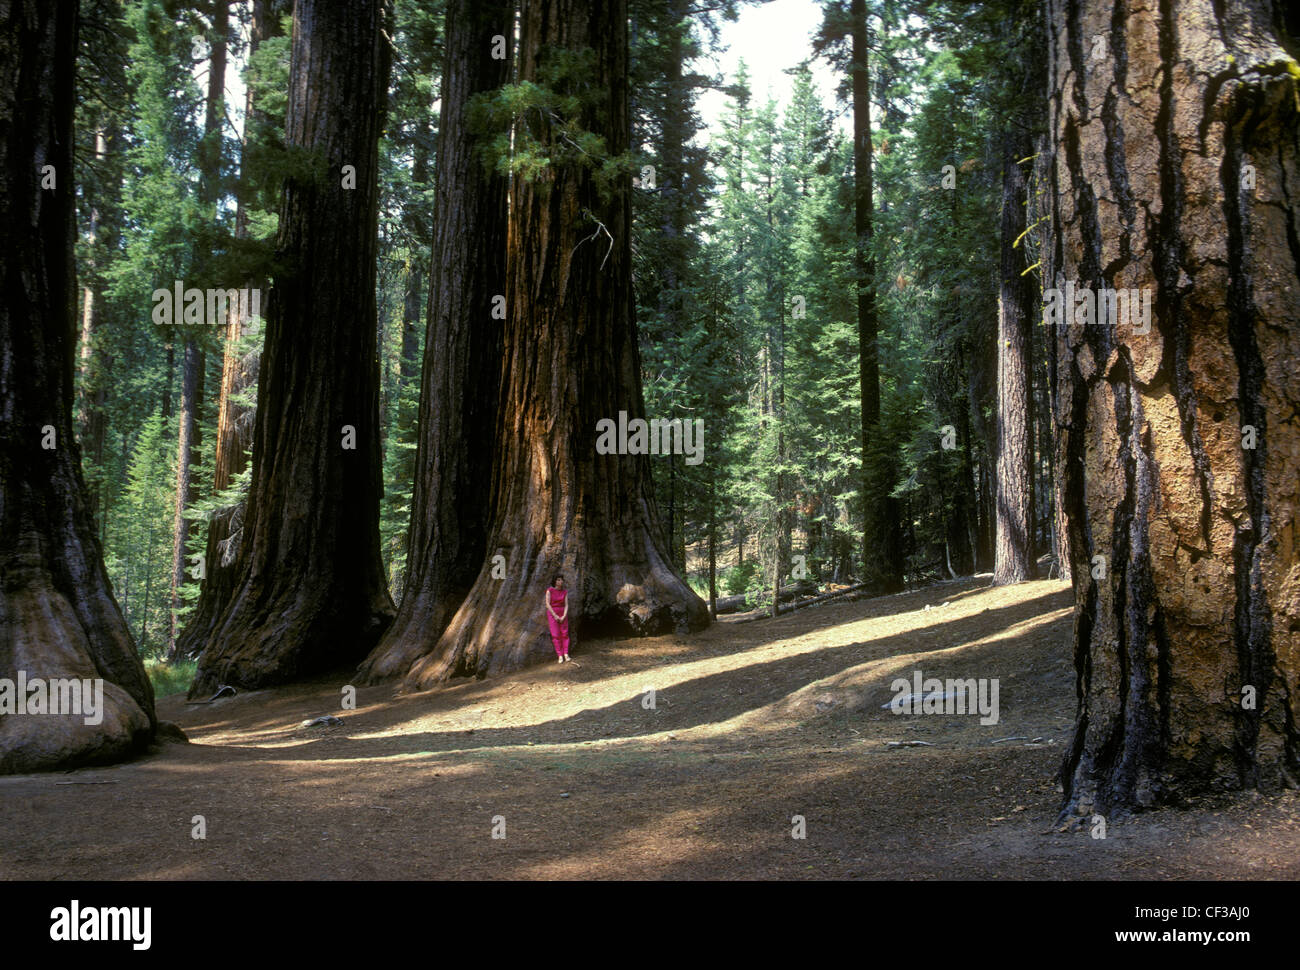 The Bachelor and Three Graces, Giant Sequoia trees, Mariposa Grove, Yosemite, National Park, Yosemite National Park, California Stock Photo